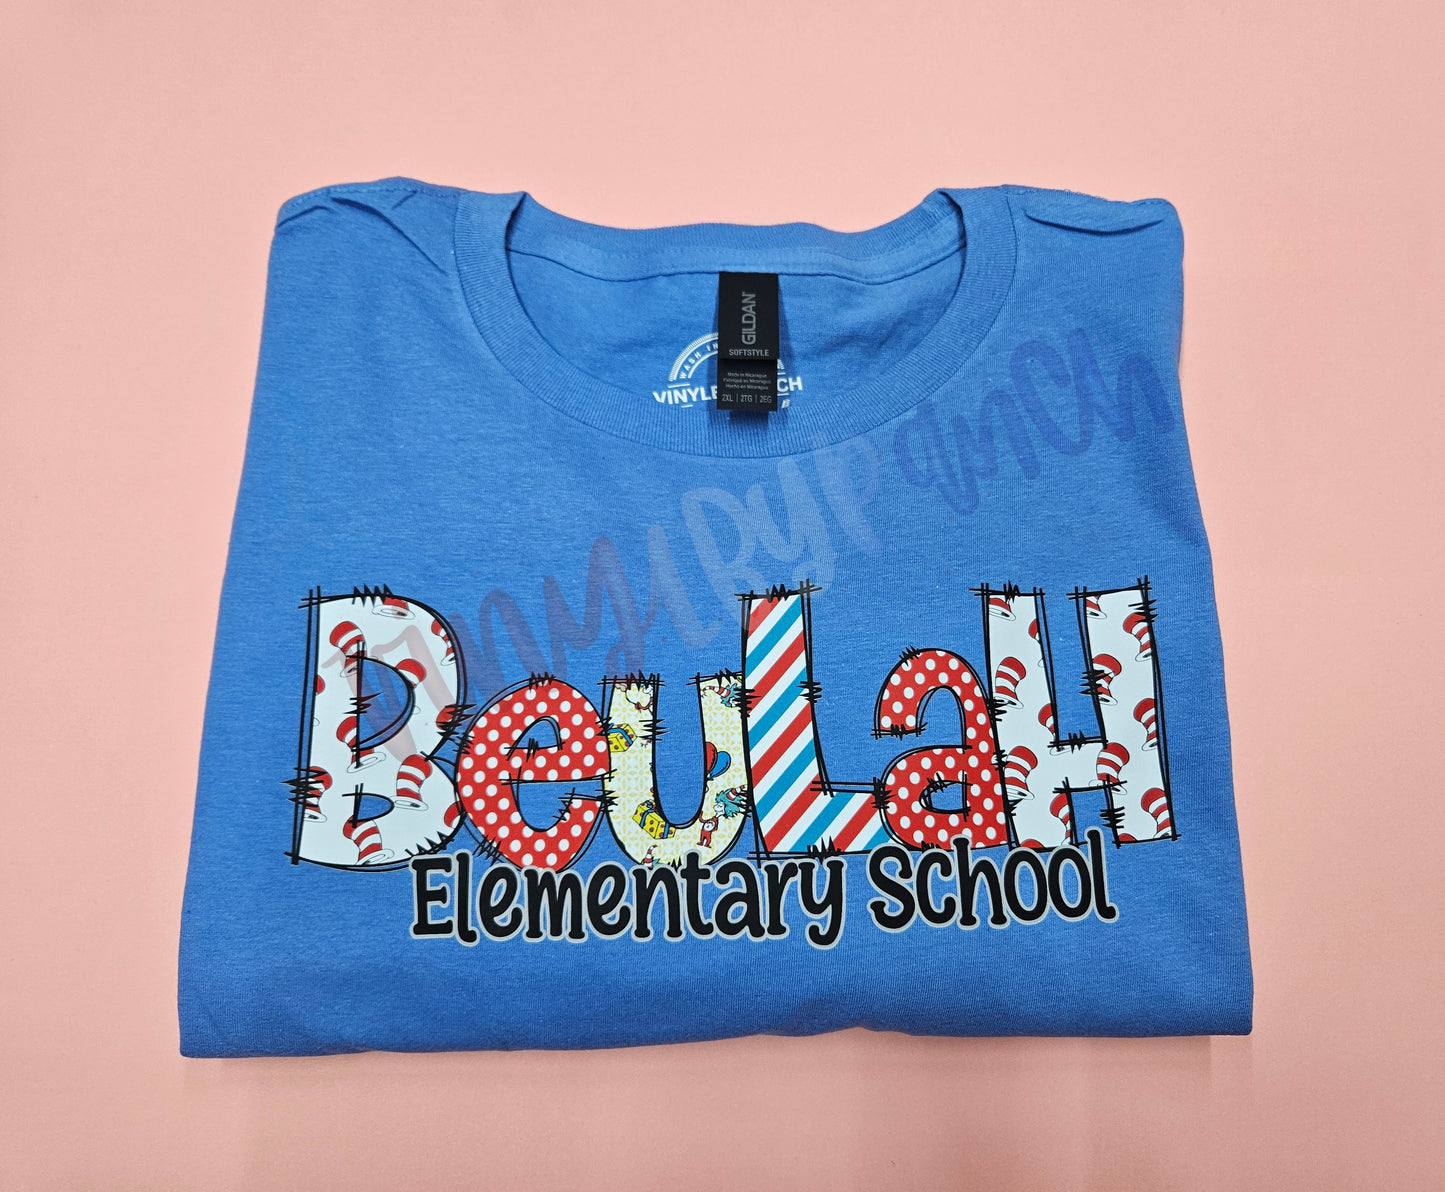 Beulah Elementary